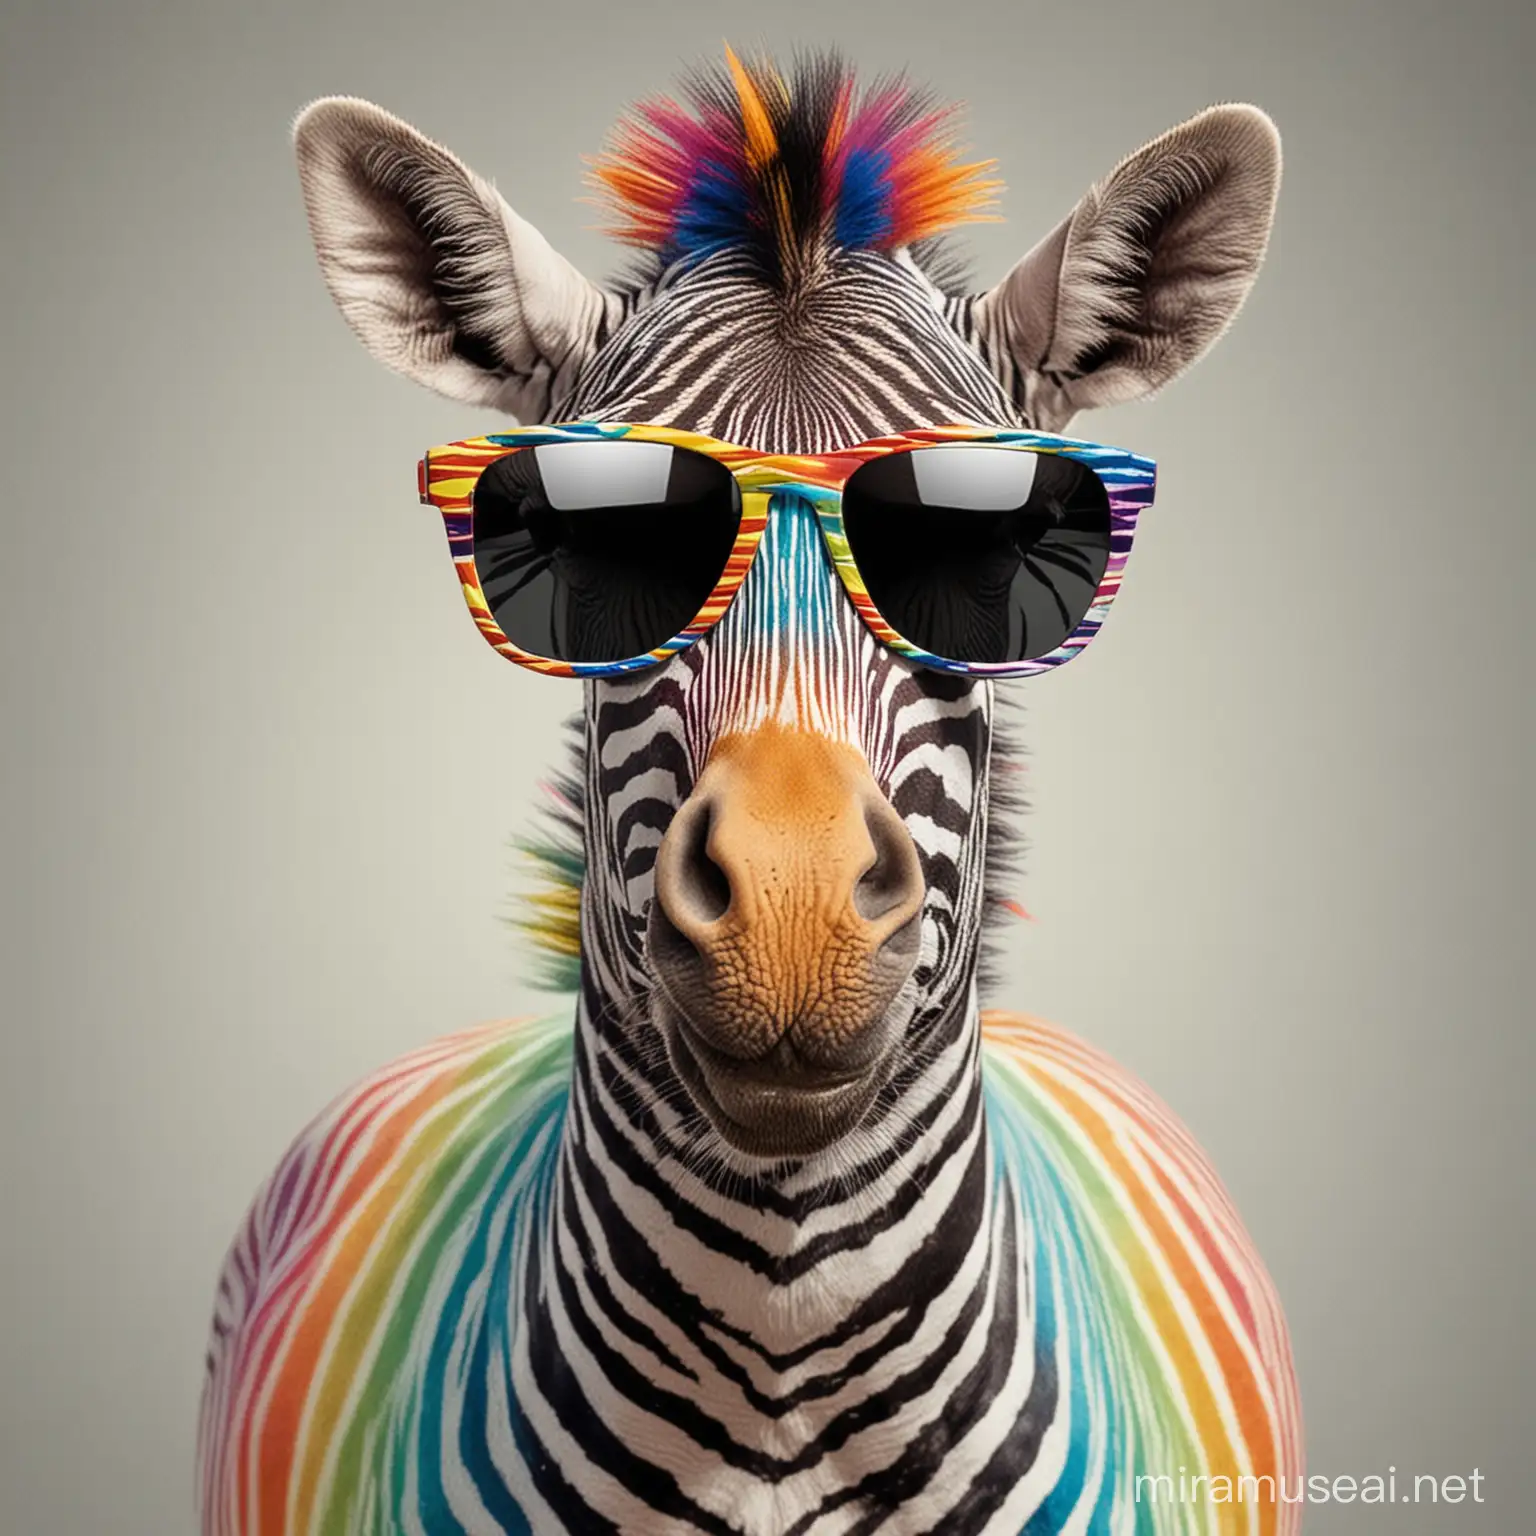 coloured zebra with sunglasses
